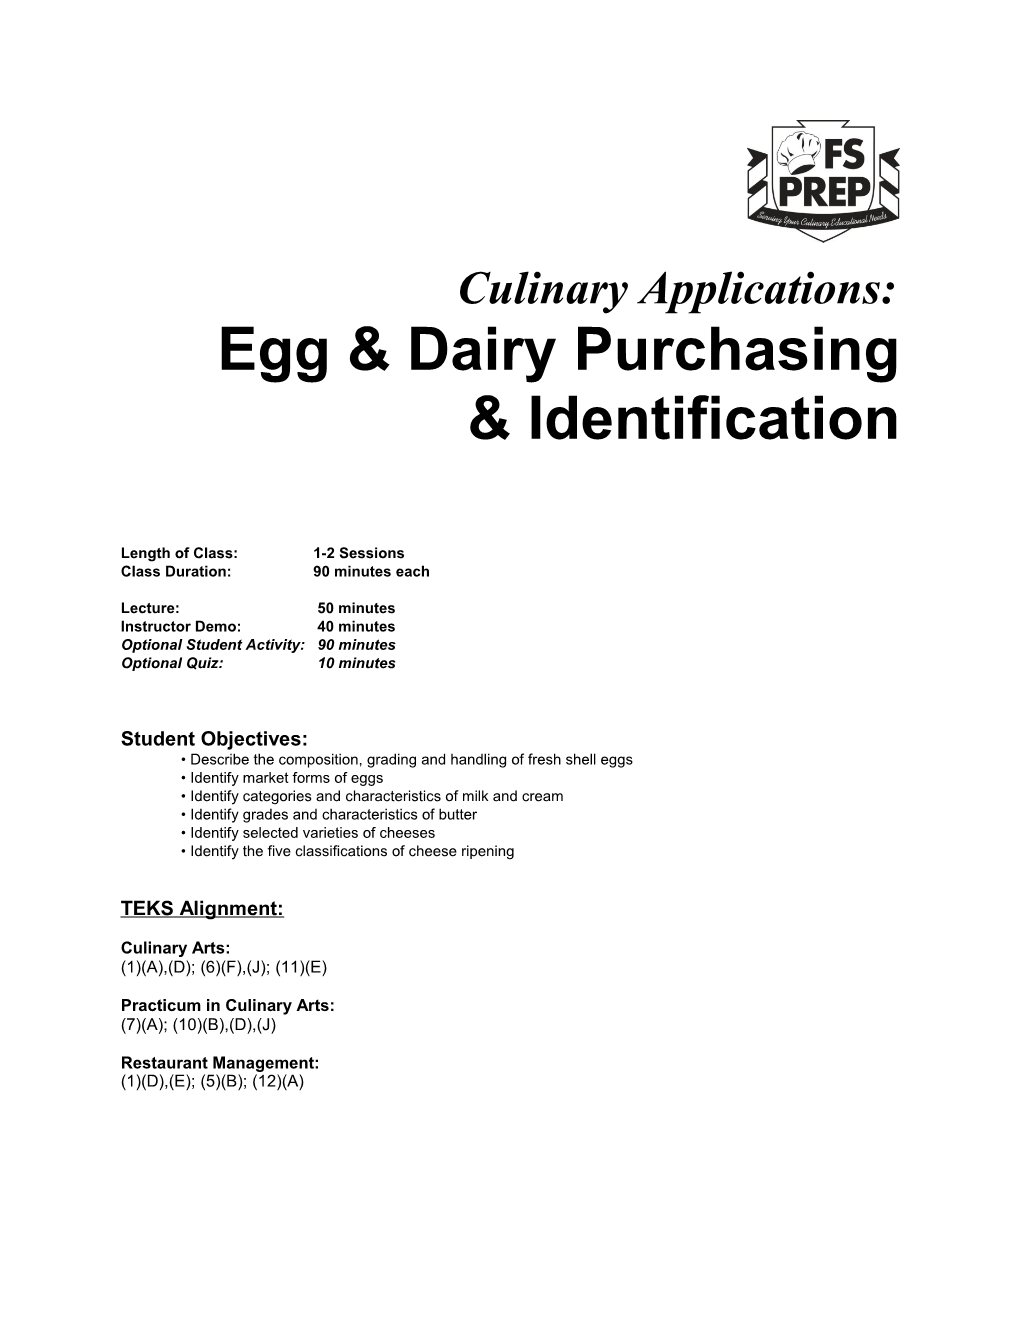 Egg & Dairy Purchasing & Identification